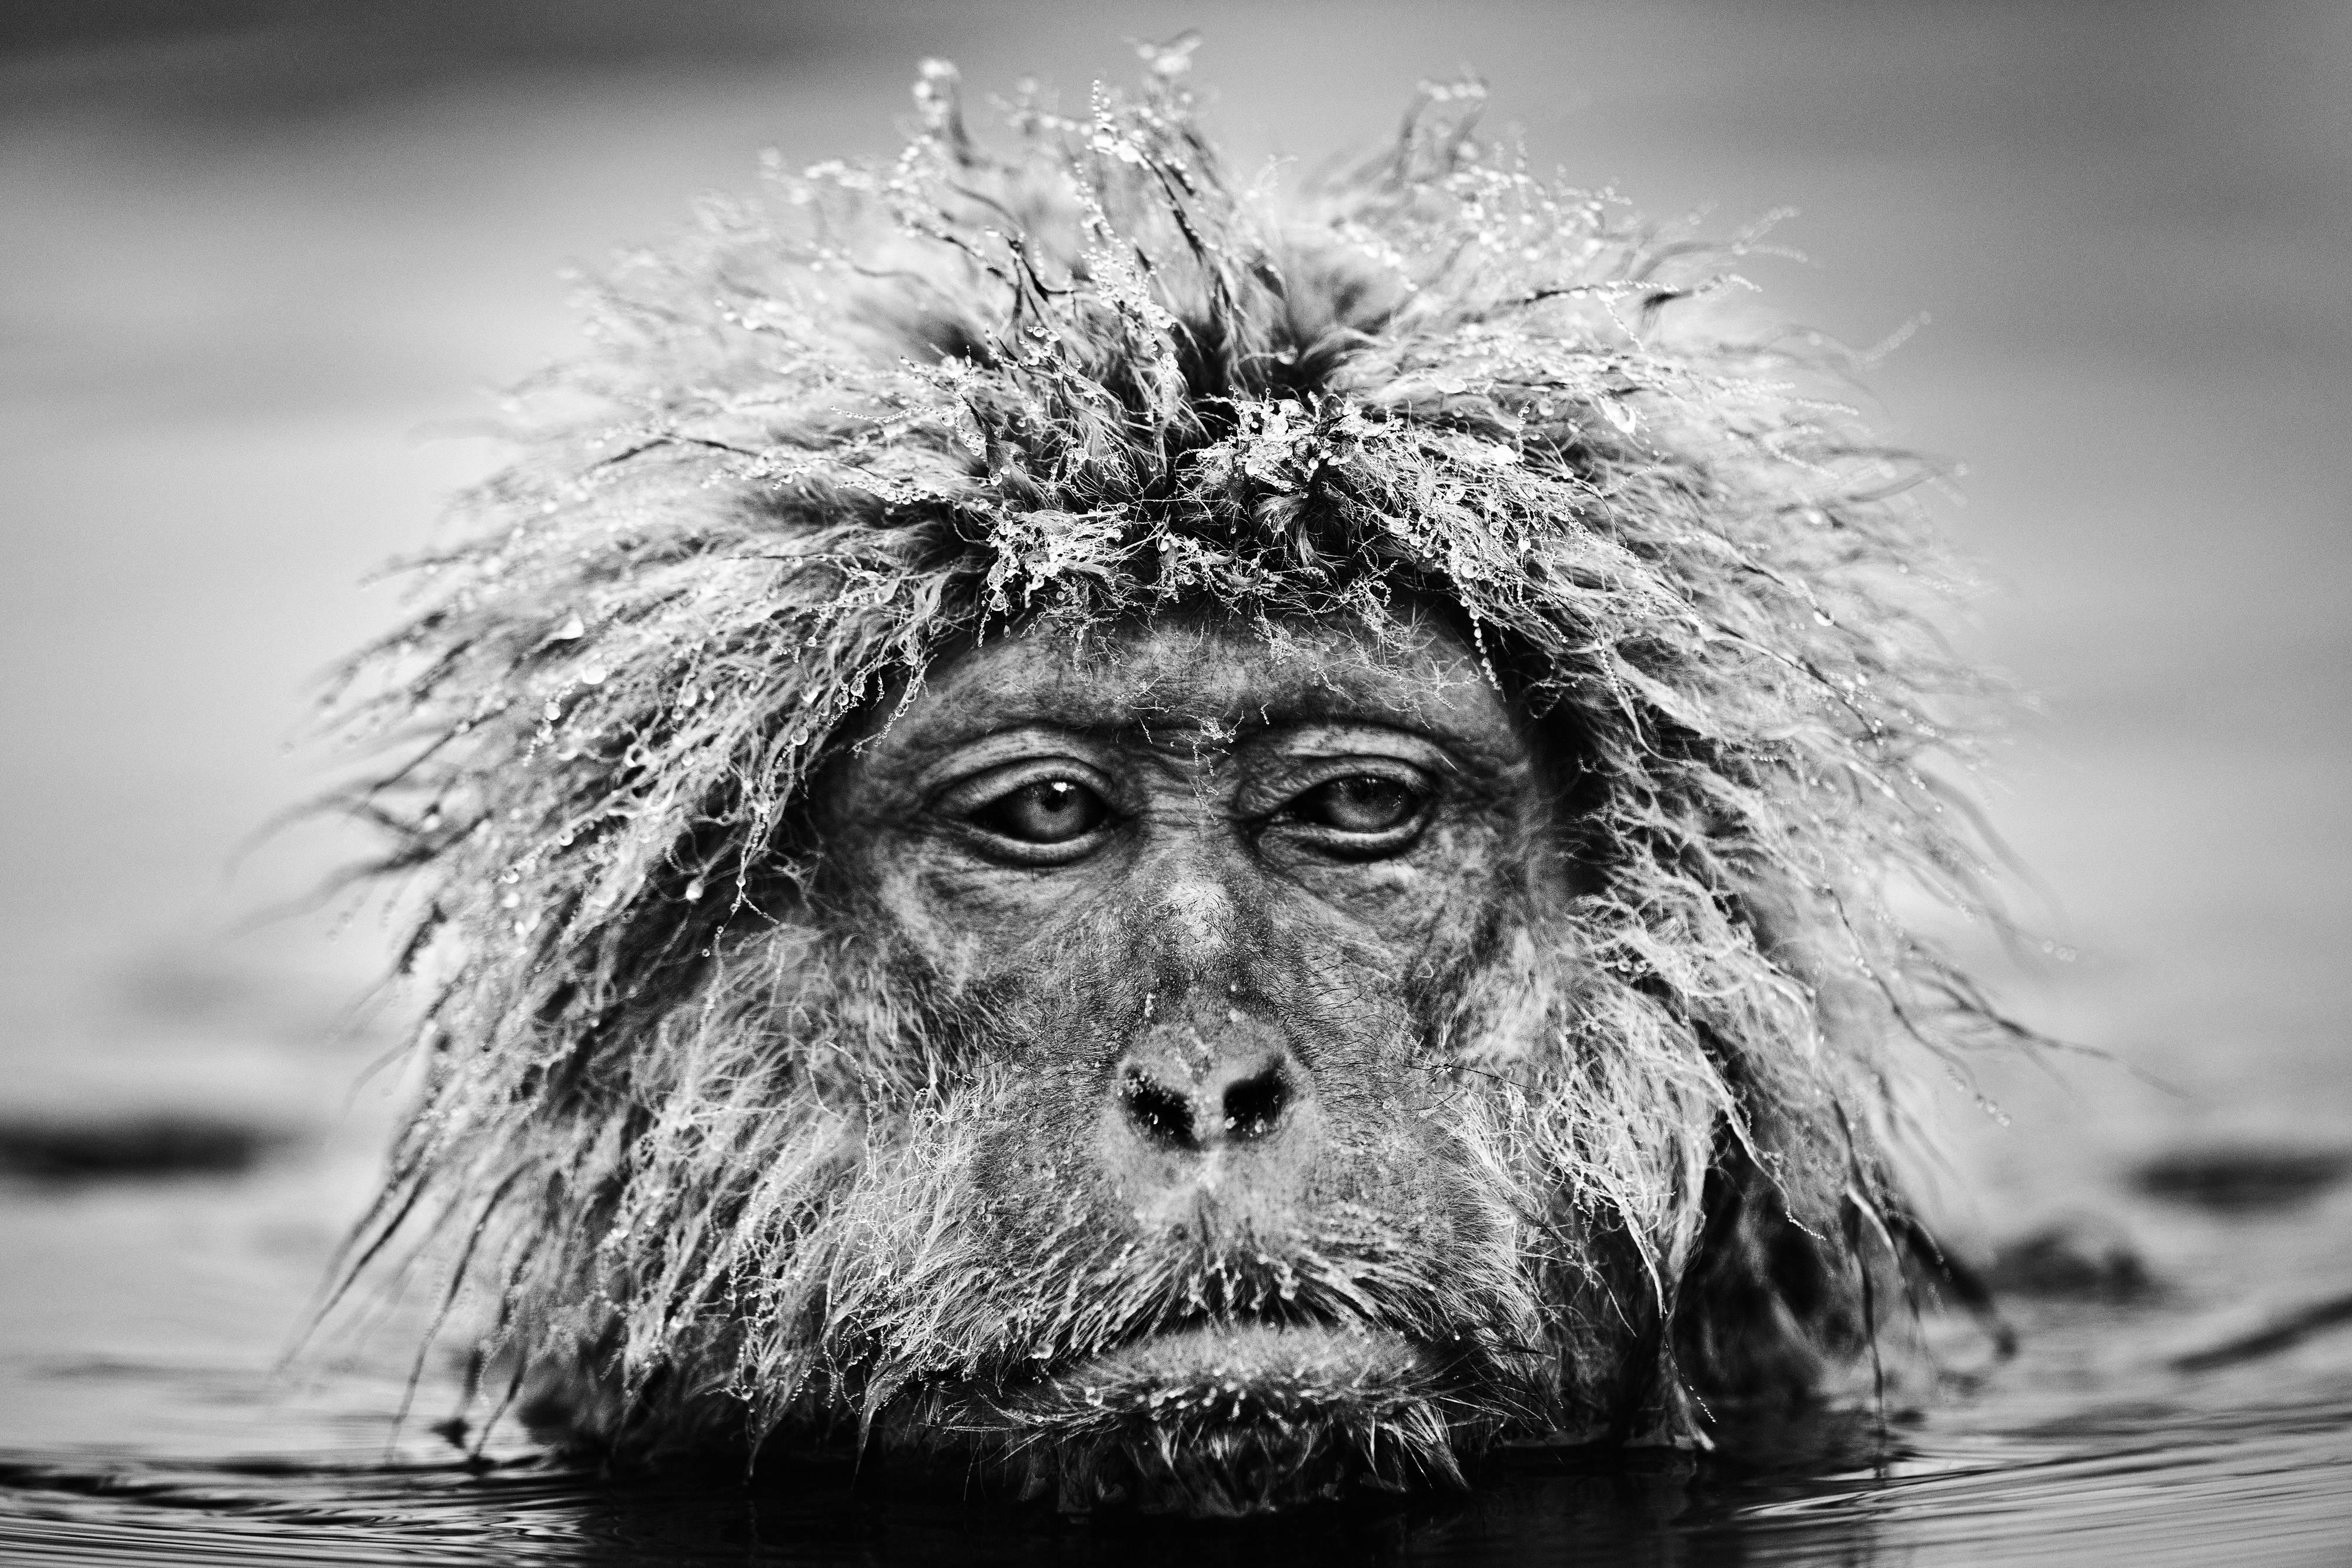 David Yarrow Black and White Photograph - Grumpy Monkey